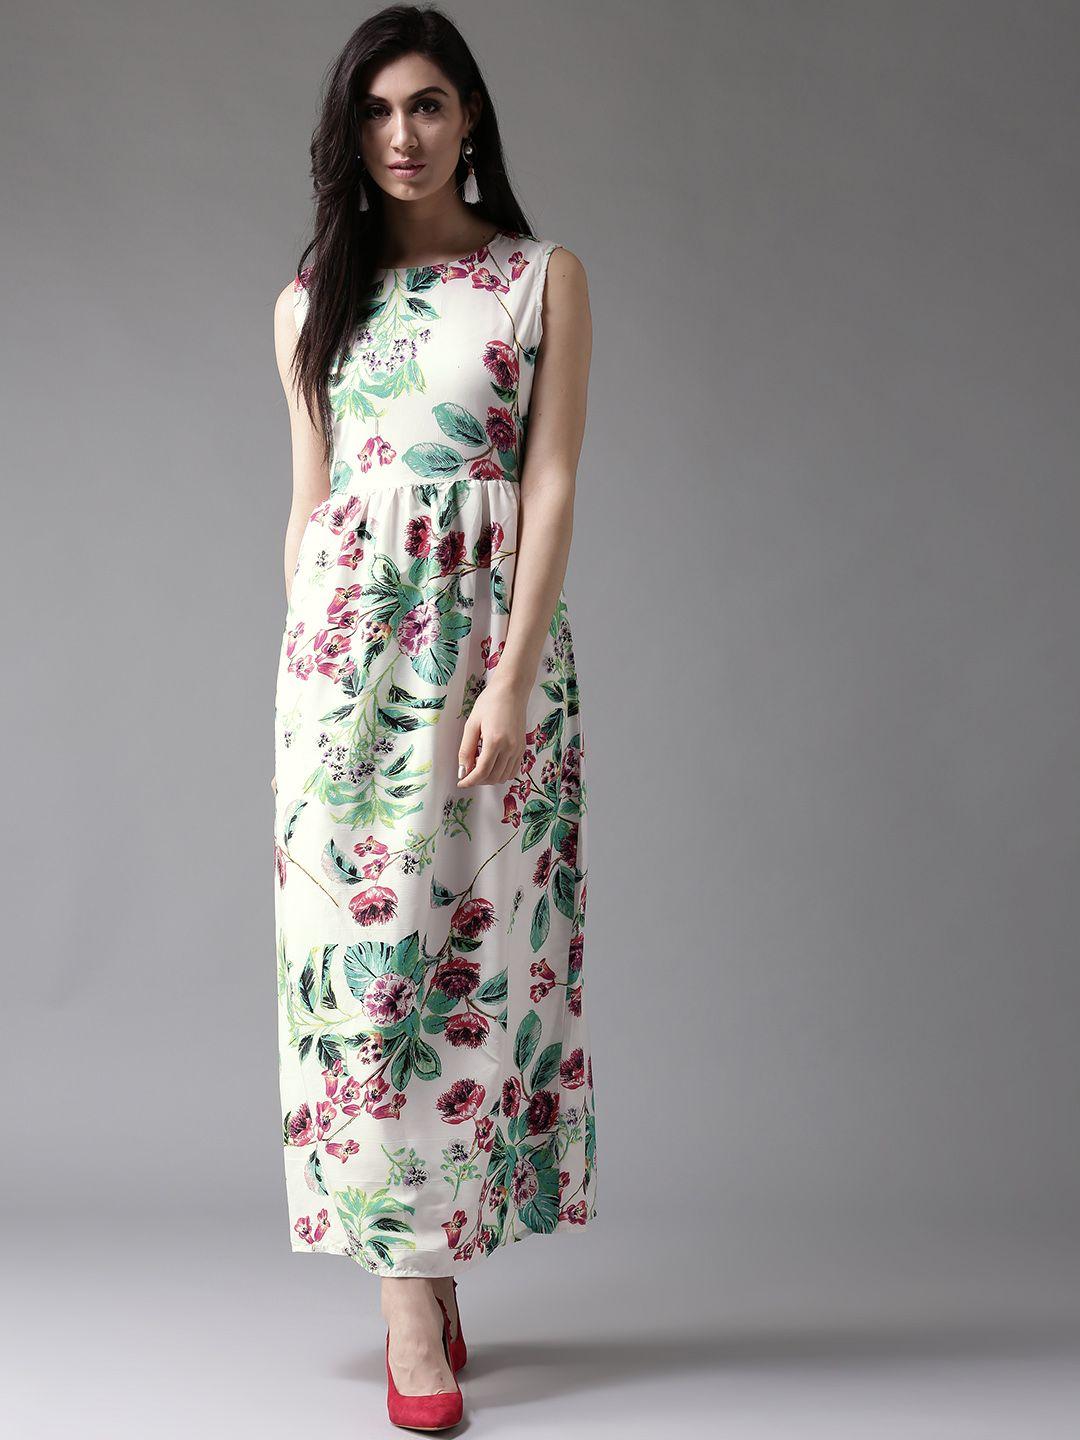 here&now women white & green floral print maxi dress